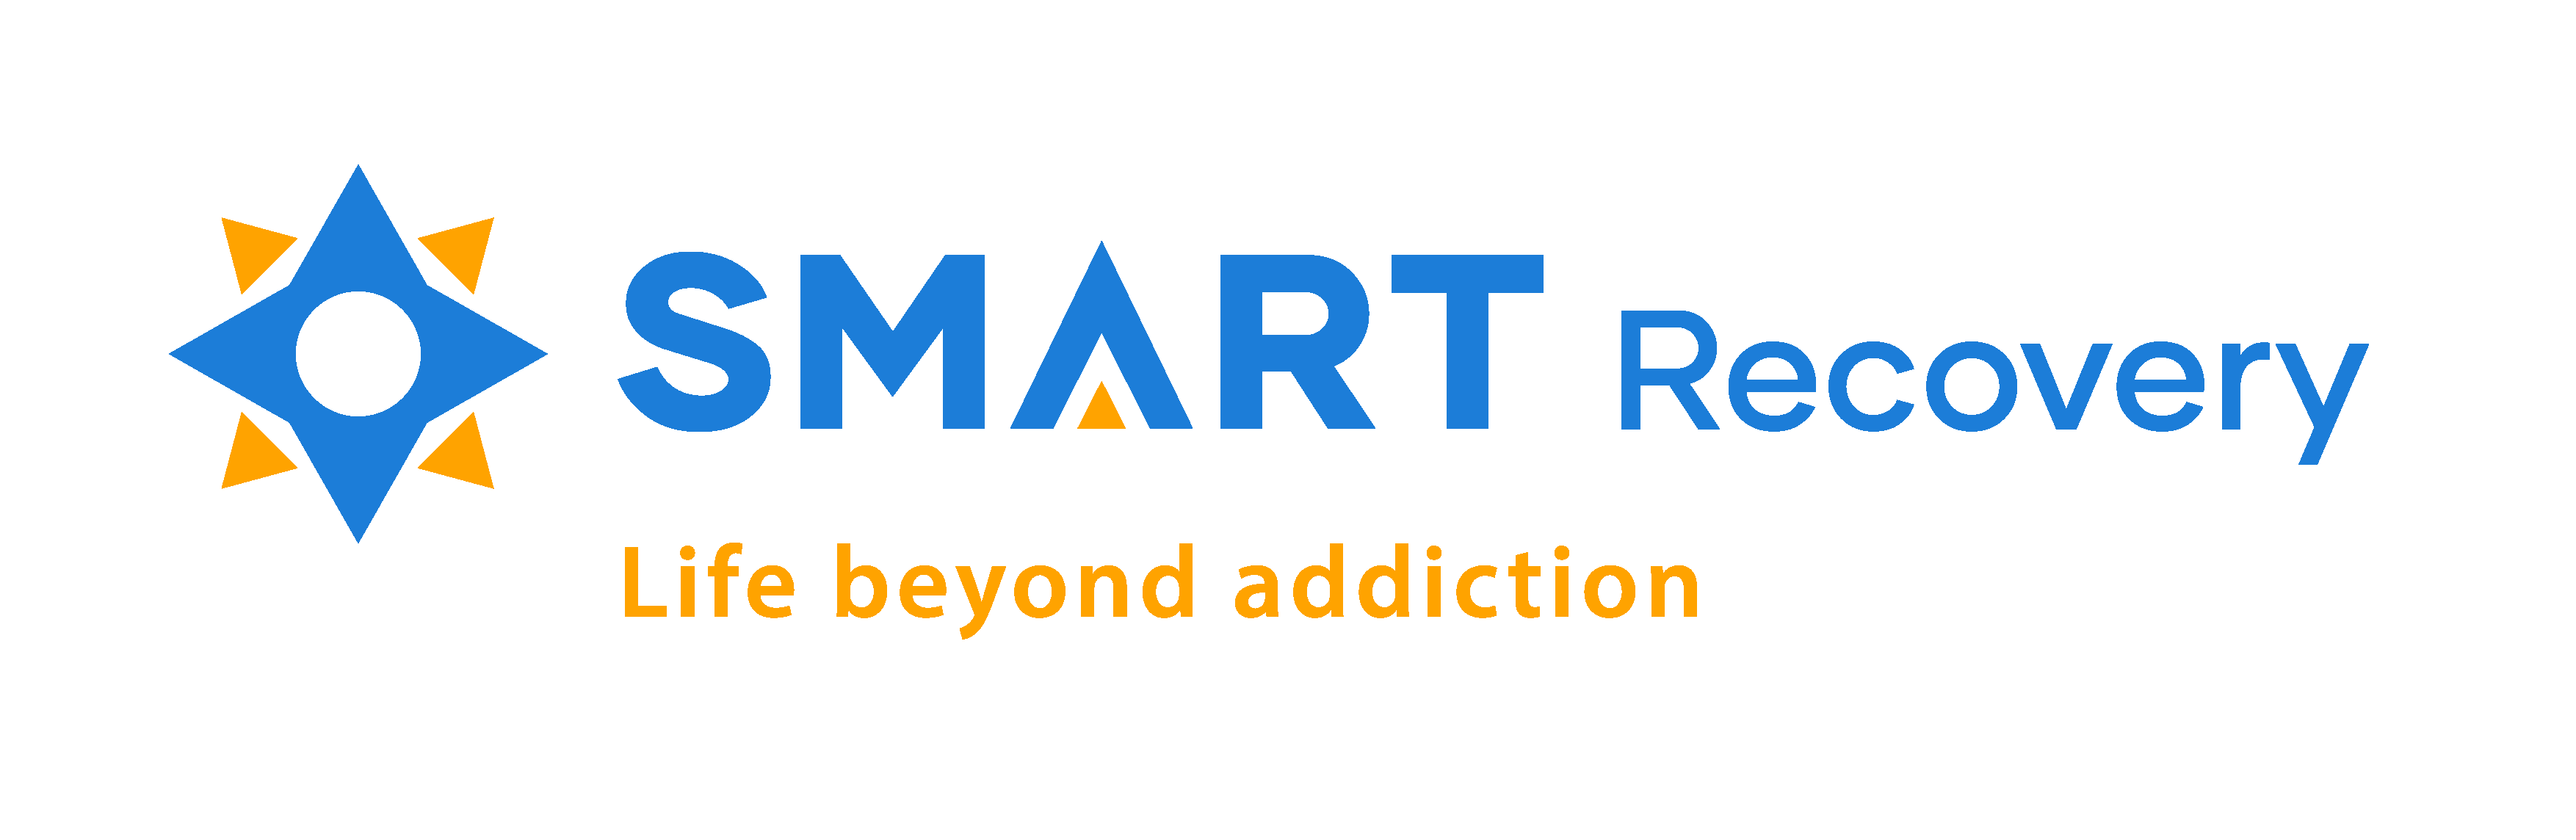 SMART Recovery Australia logo horizontal